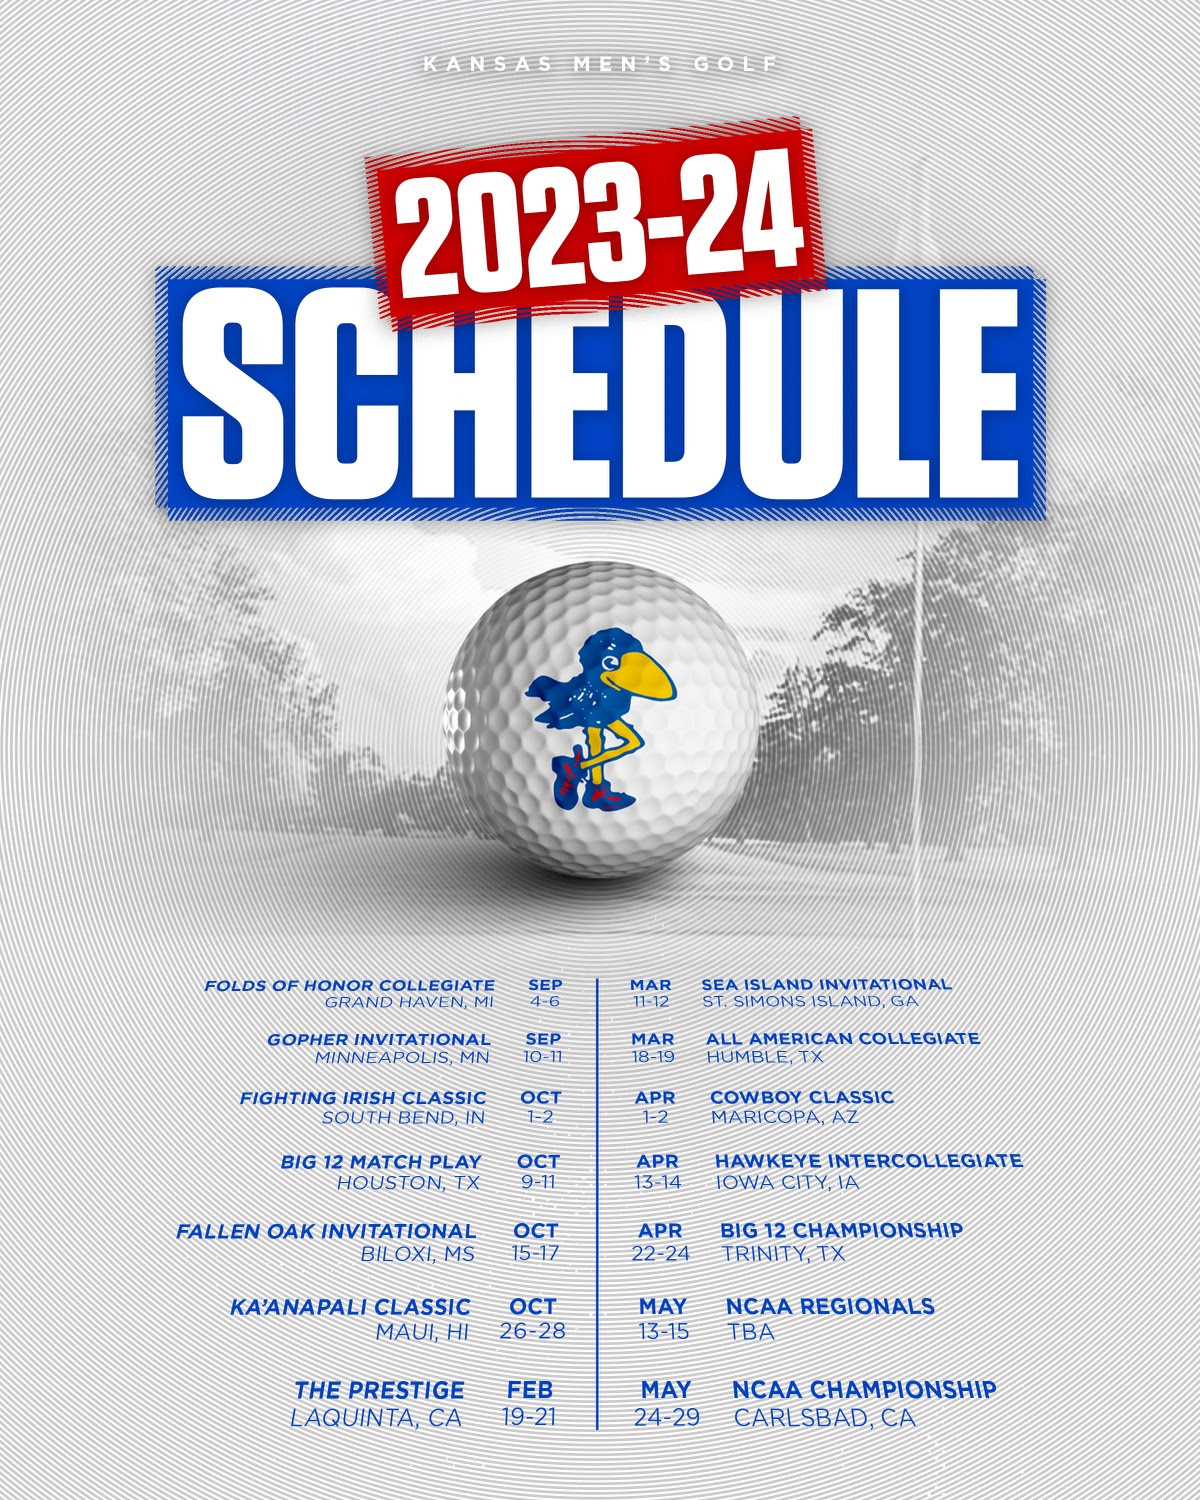 St. Louis Blues Schedule for 2023-24